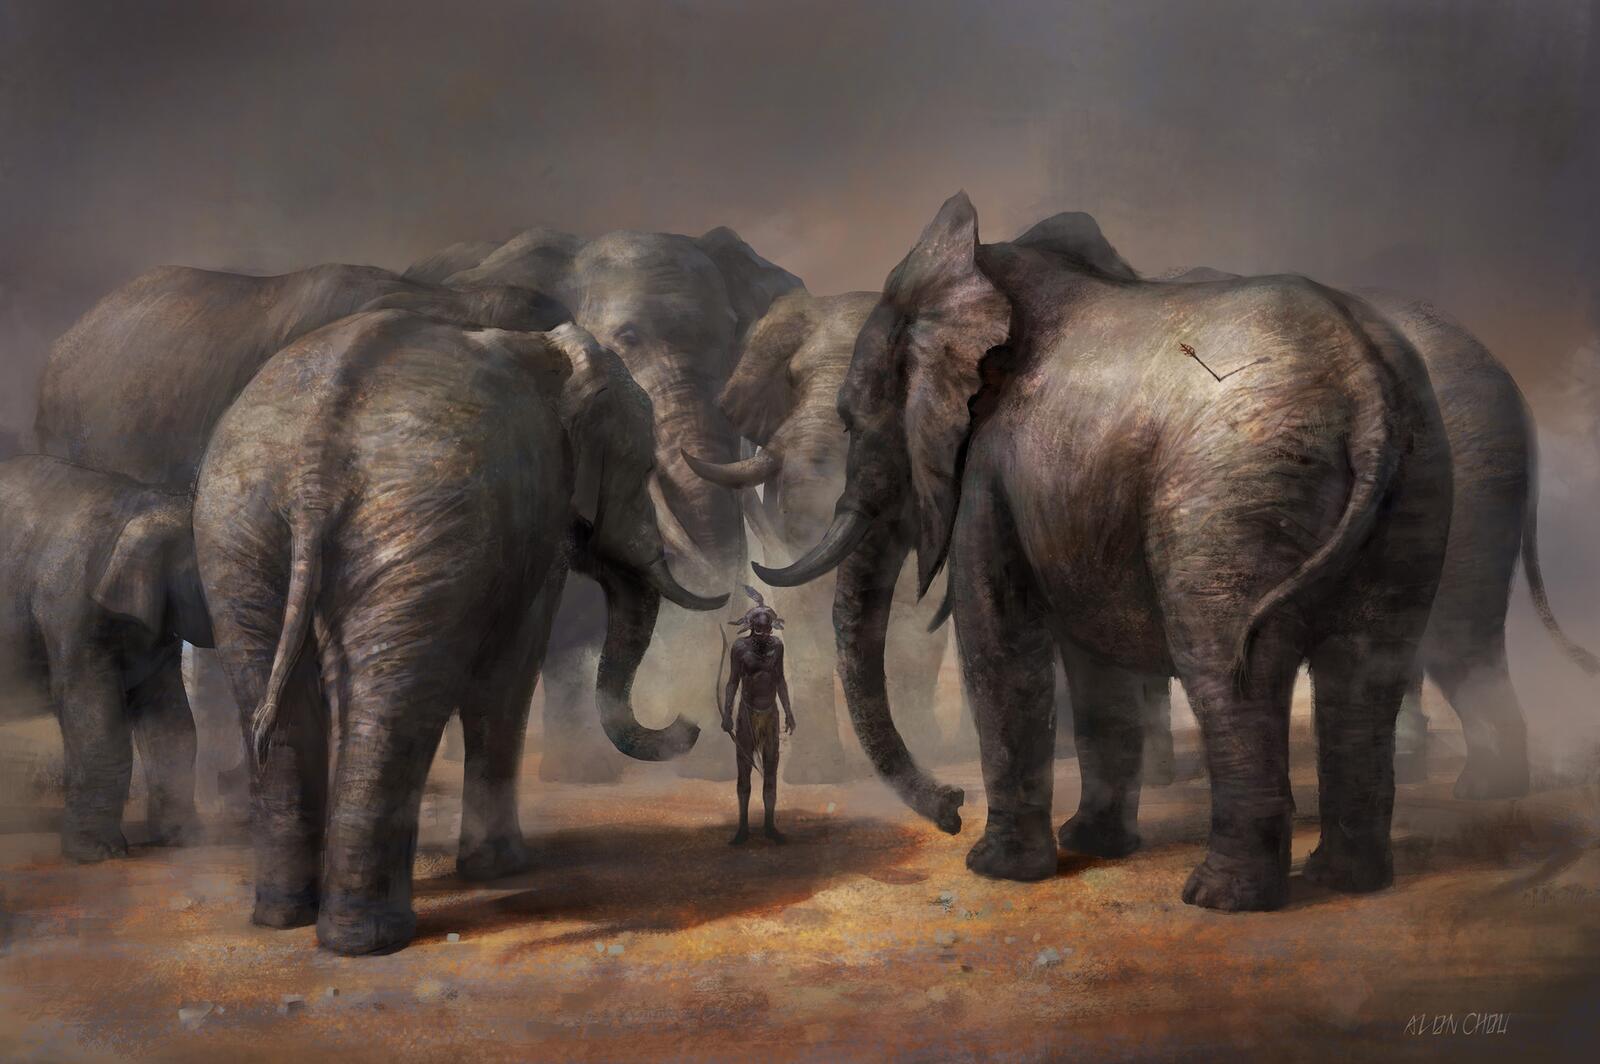 Wallpapers fantasy artworks elephant on the desktop